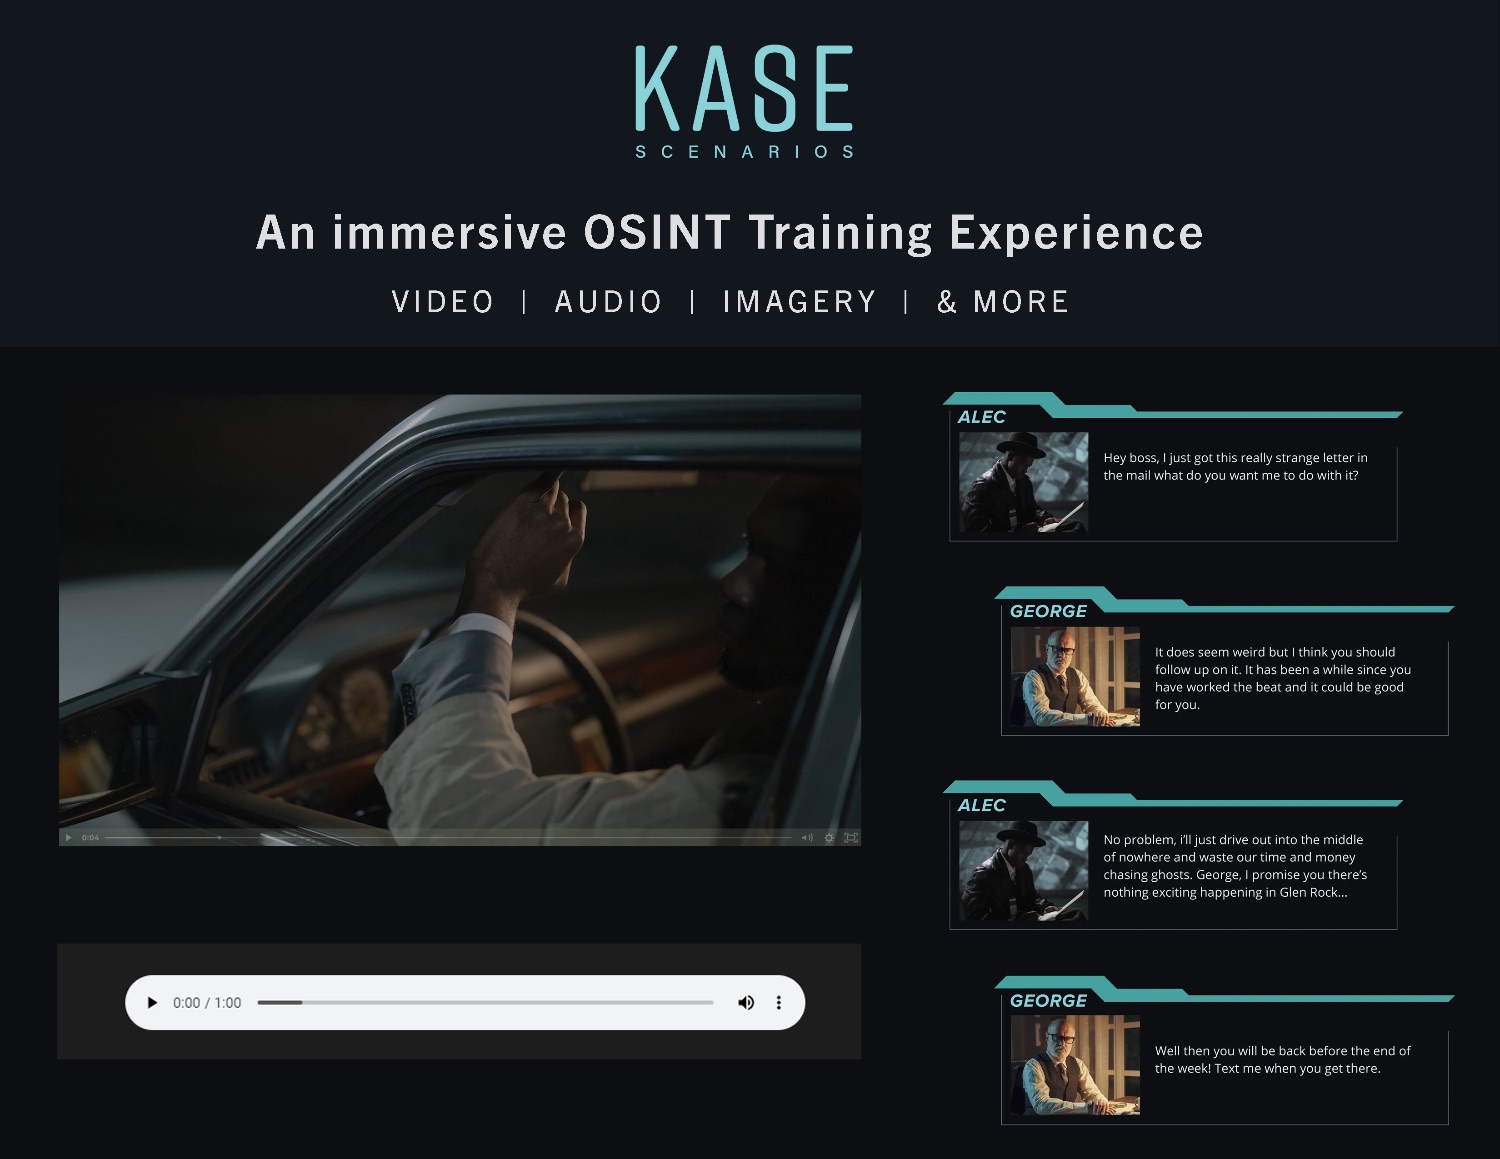 Story-based OSINT training by Kase Scenarios